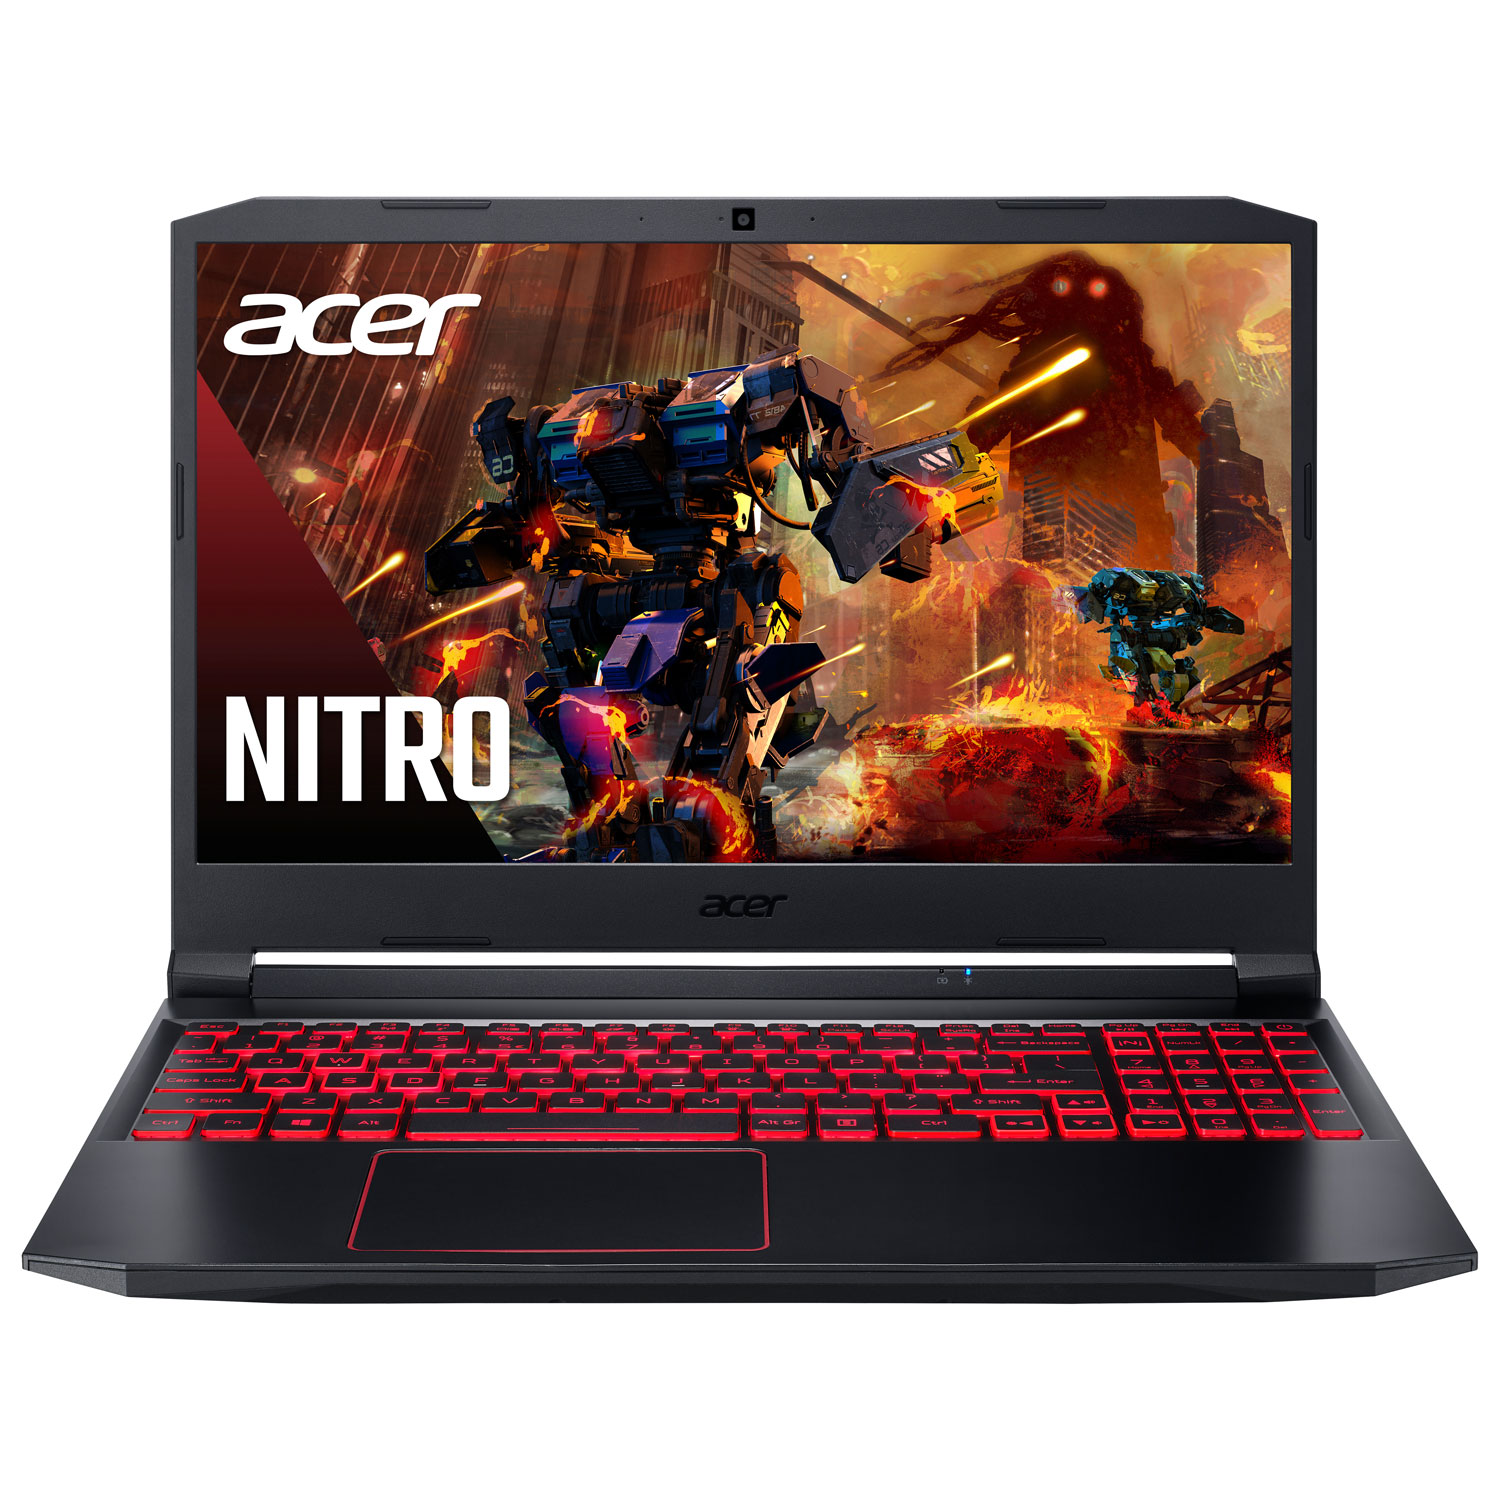 Acer Nitro 5 15.6" Gaming Laptop - Black (Intel Core i5-10300H/512GB SSD/12GB RAM/GTX 1650/Windows 11)